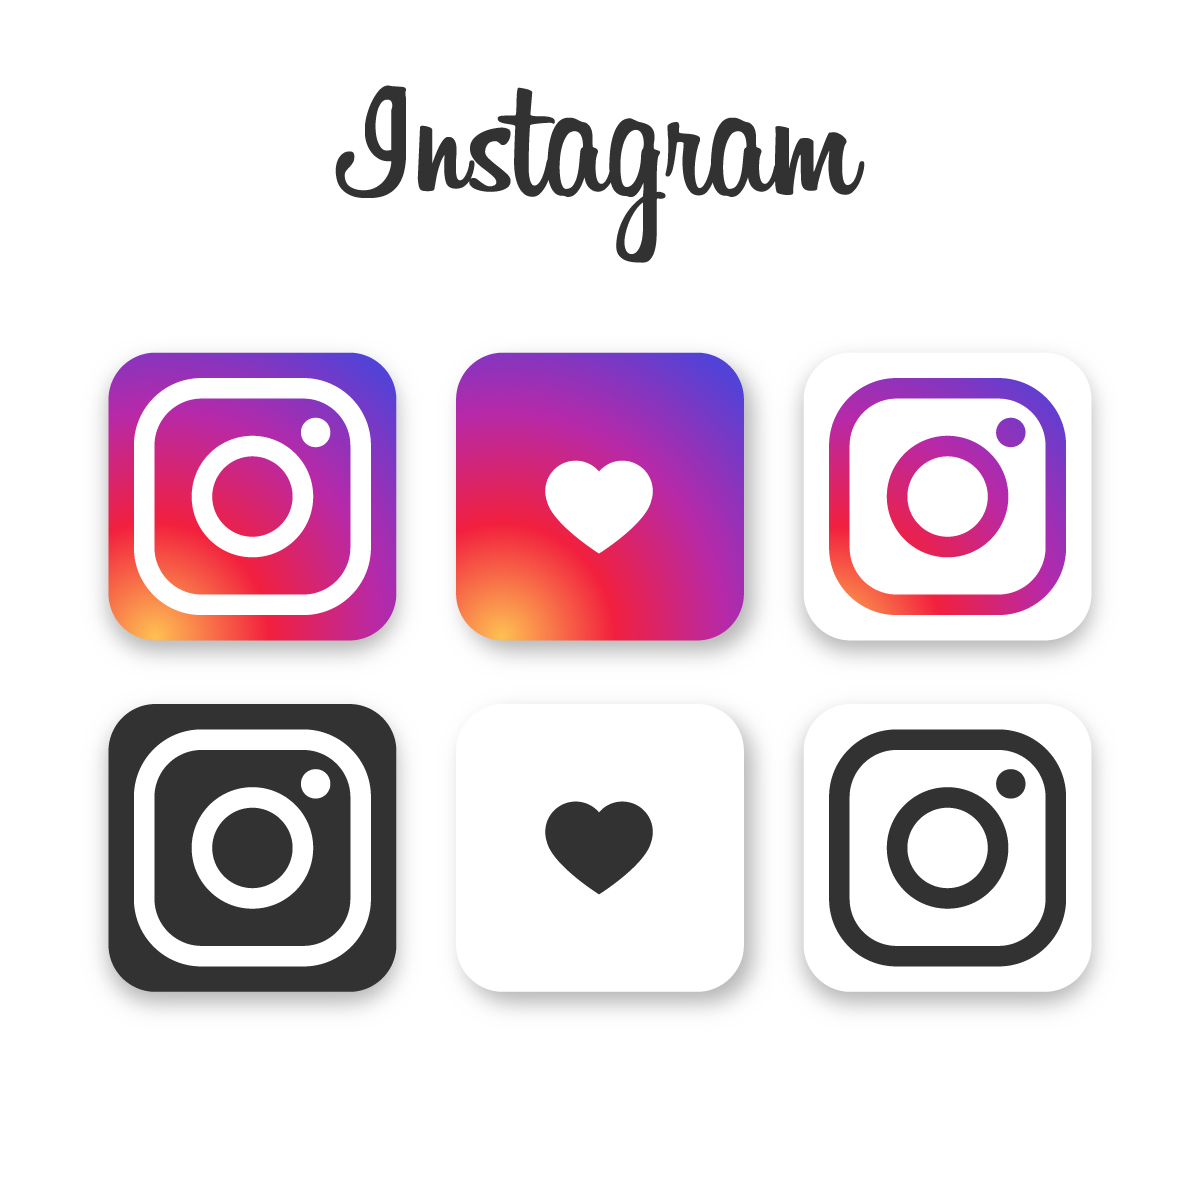 Instagram logos creatively designed 